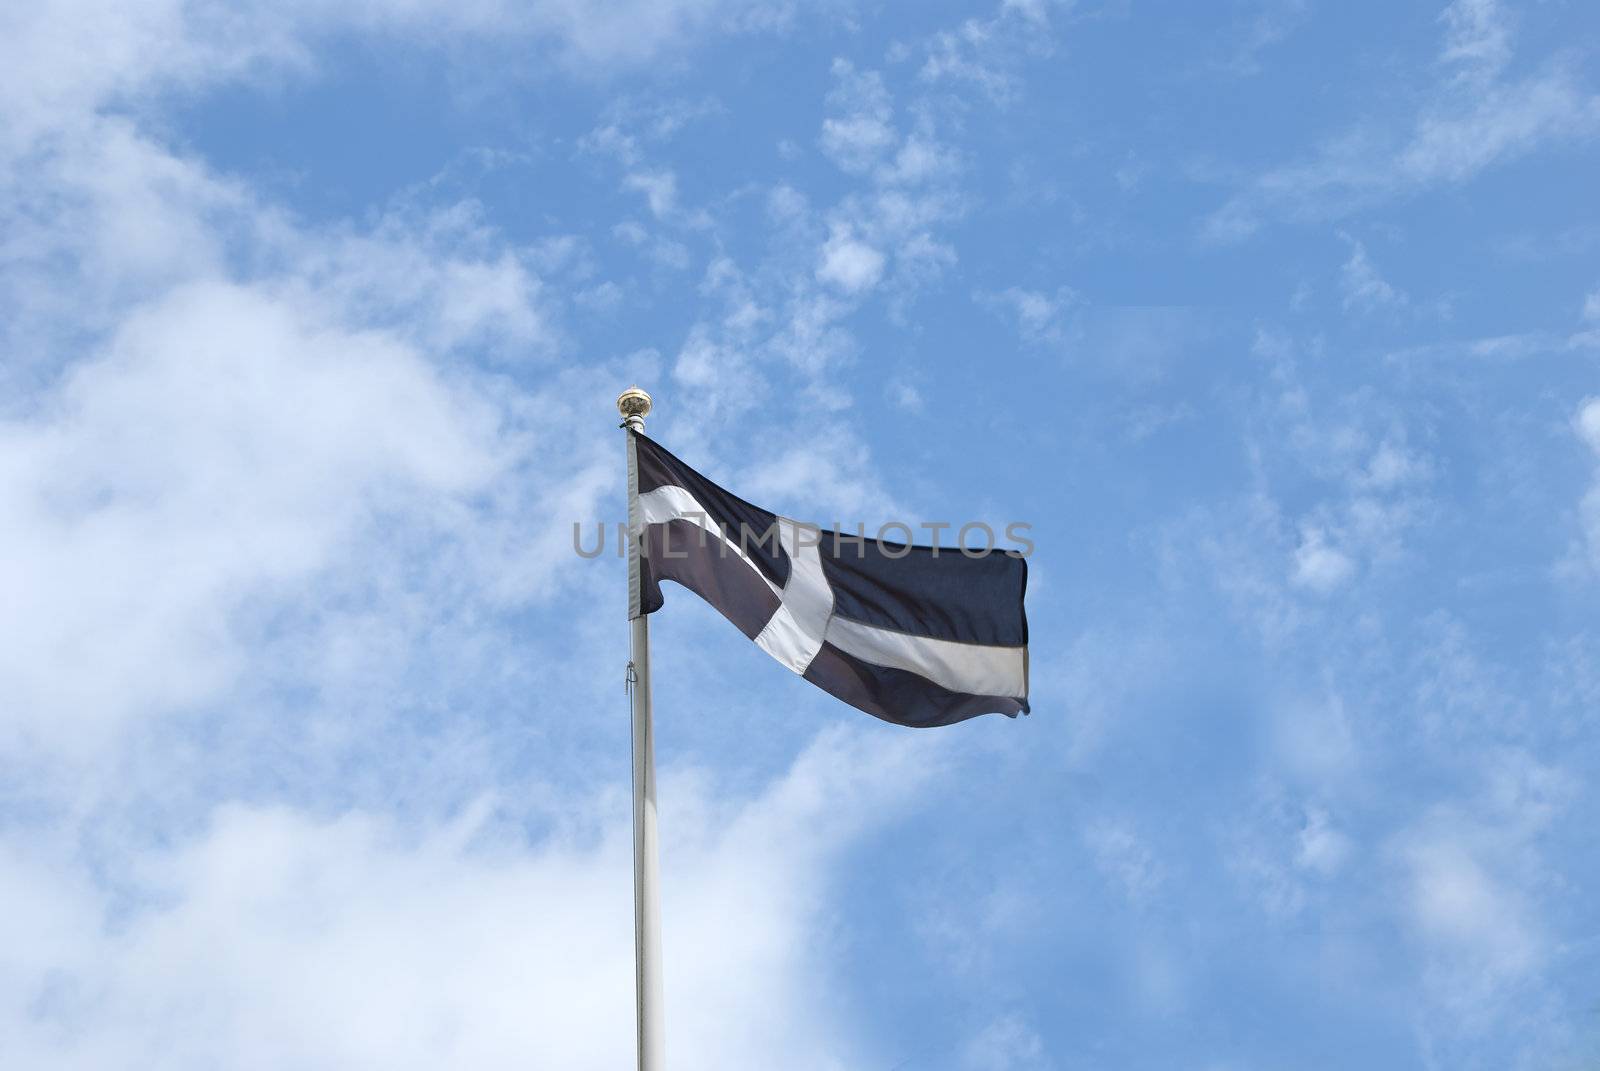 Cornish Flag by d40xboy